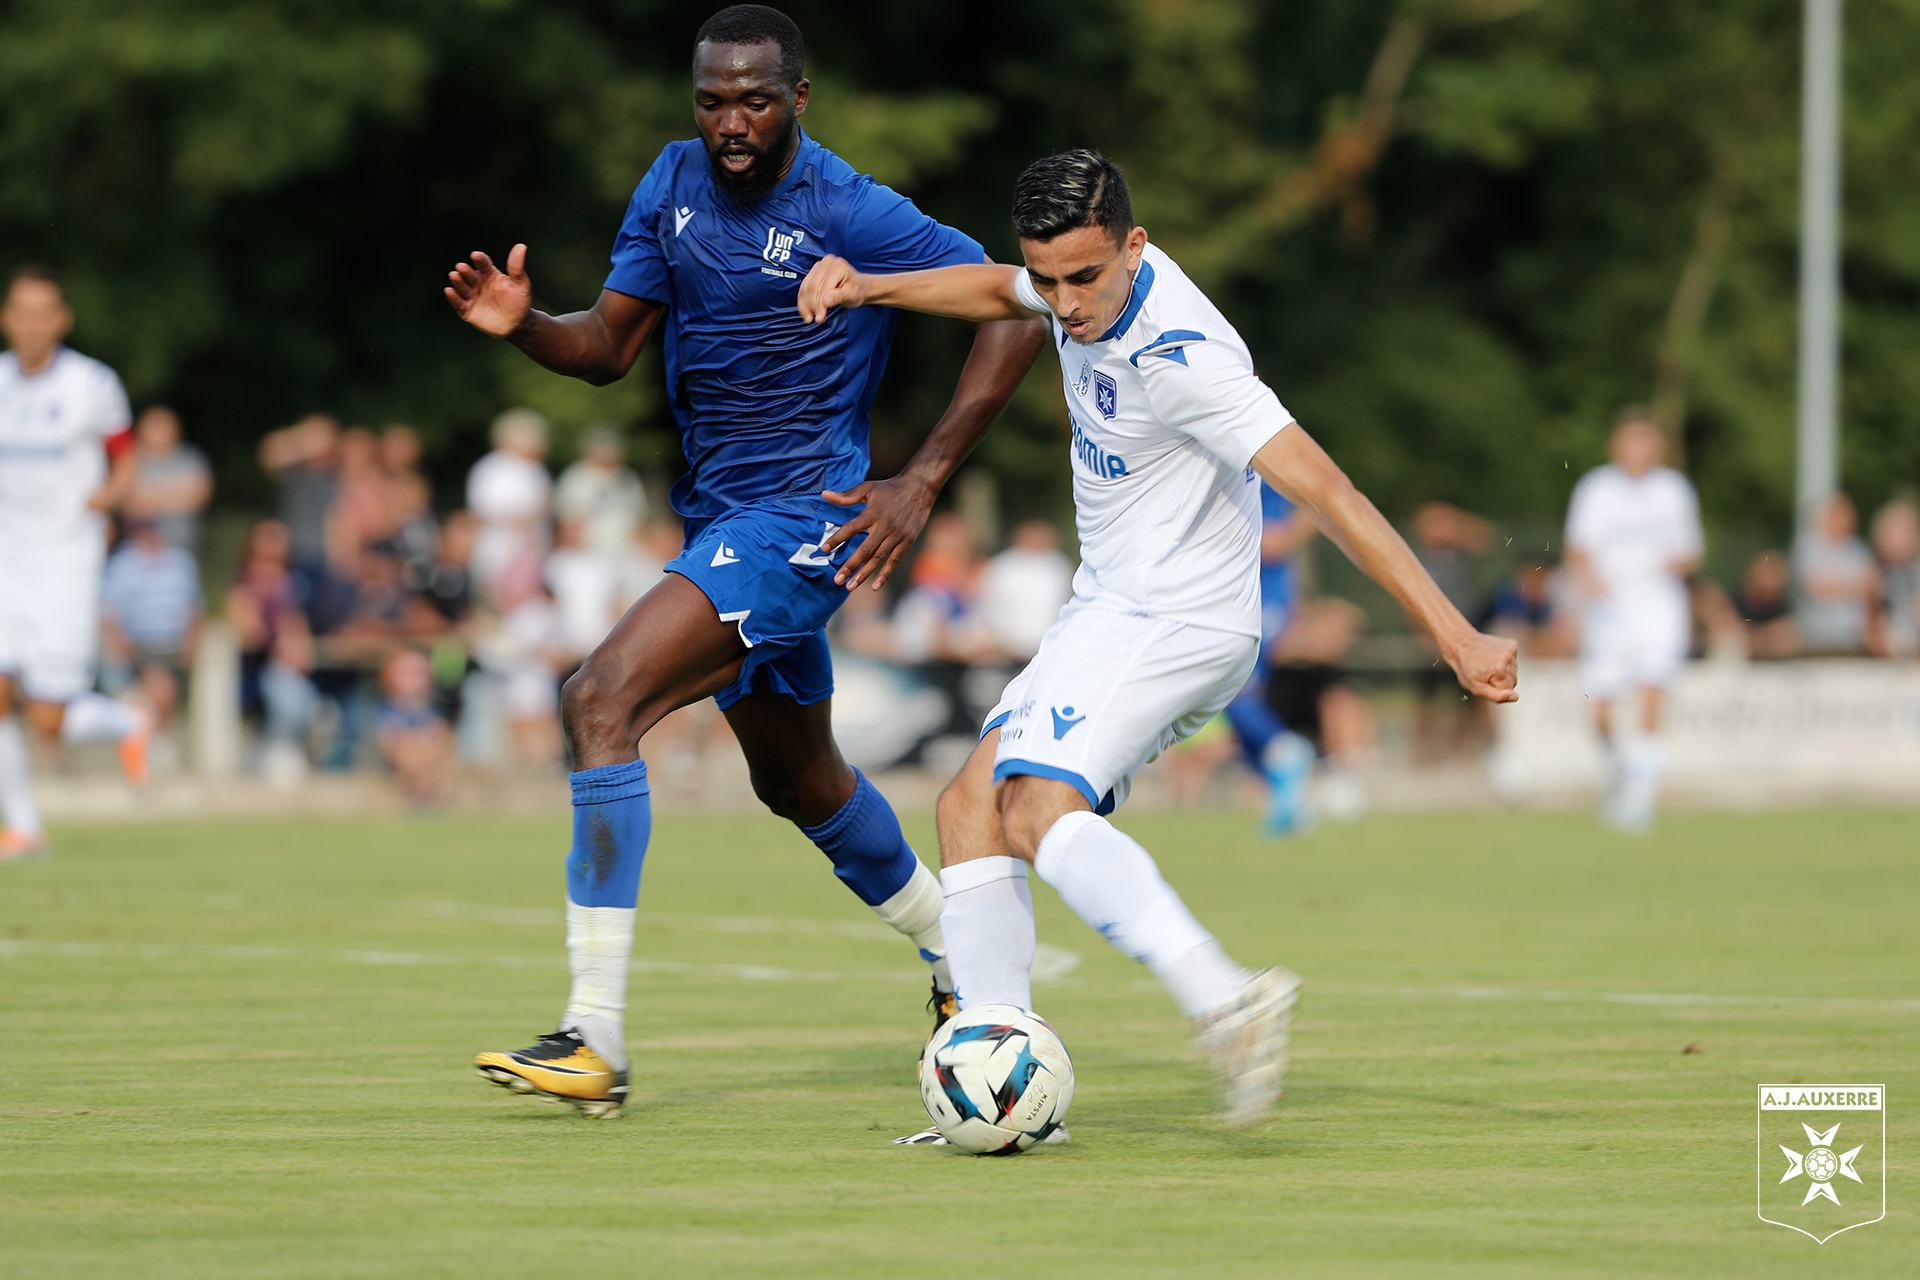 Mohamed Ben Fredj prolonge et rejoint Le Puy Foot en prêt